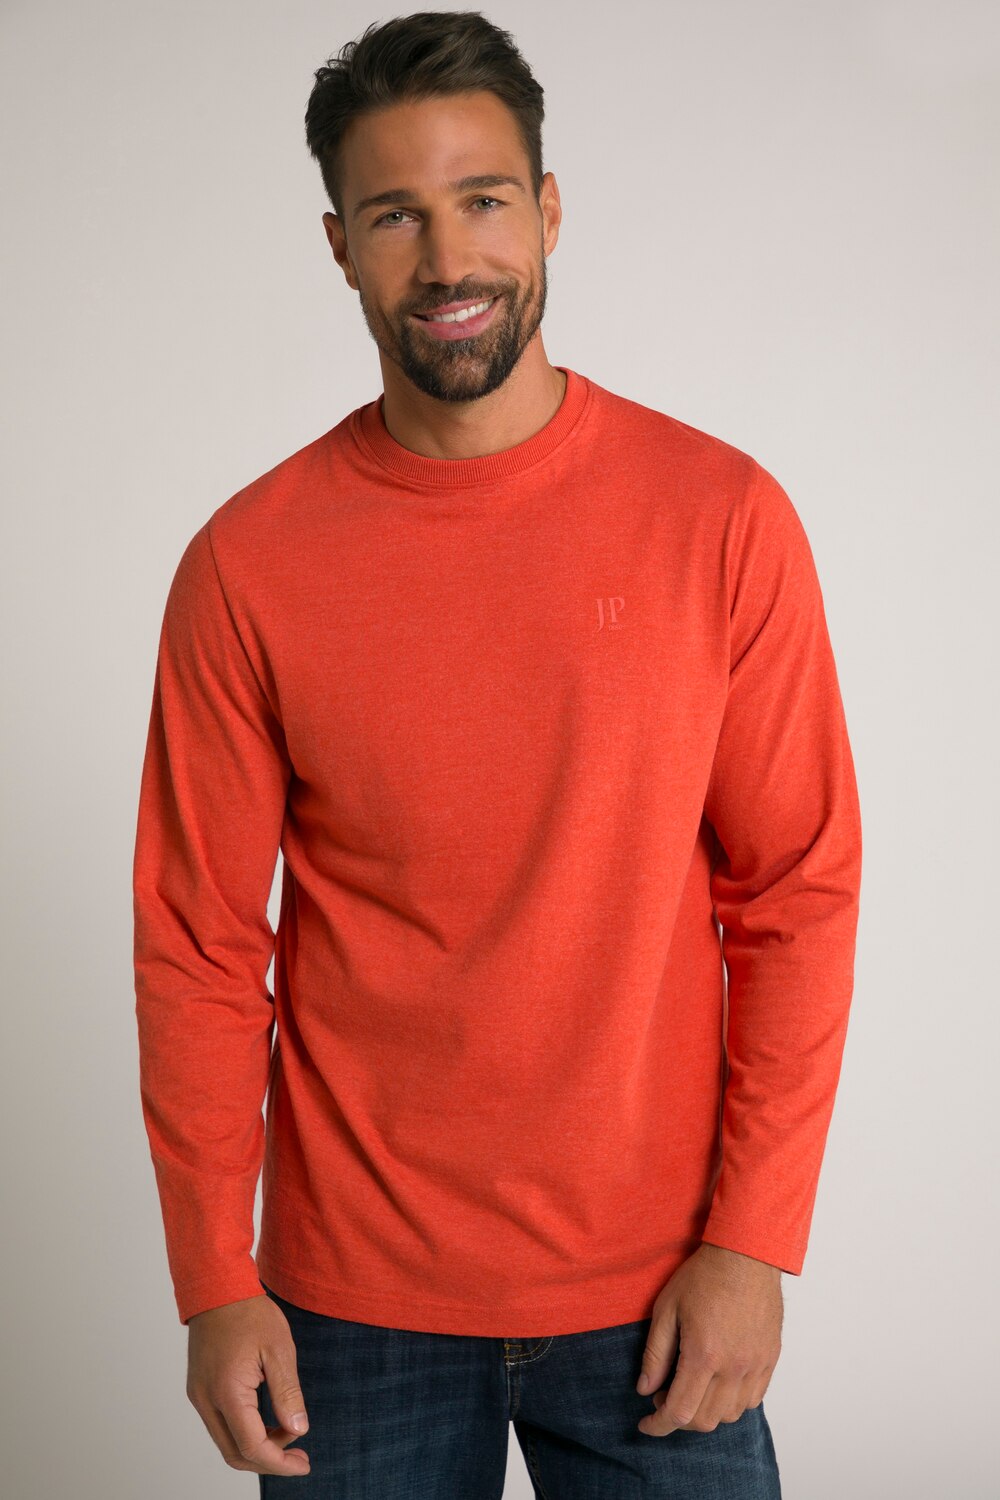 Grote Maten shirt, Heren, rood, Maat: L, Katoen/Polyester, JP1880